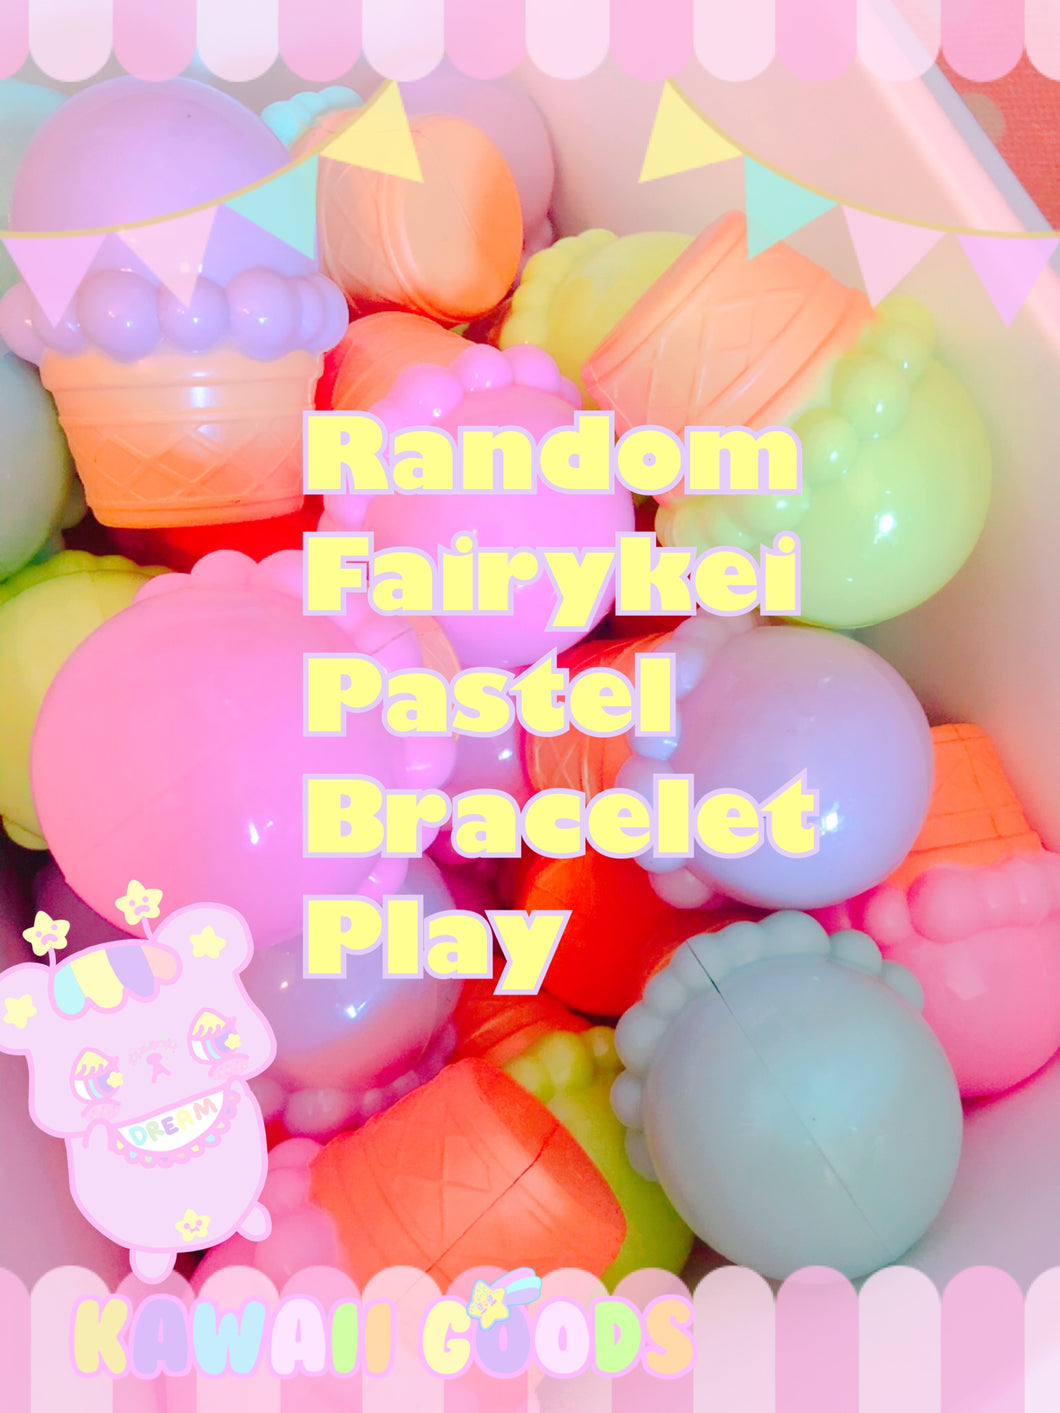 Ice Cream Cone Capsule Play Time! Get Random Fairykei Pastel Bracelet